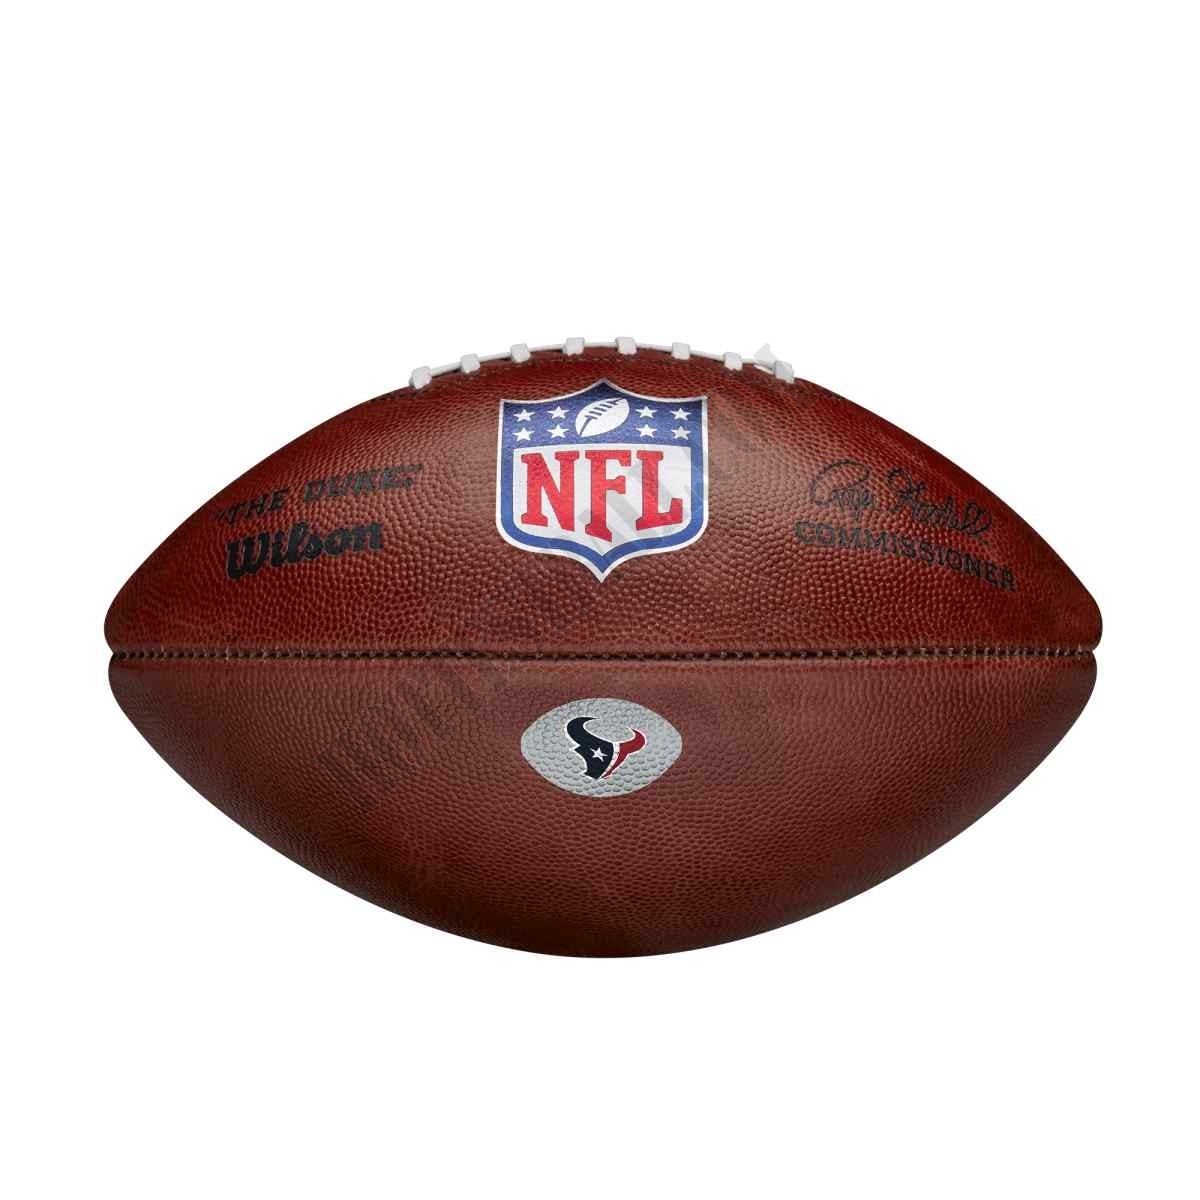 The Duke Decal NFL Football - Houston Texans ● Wilson Promotions - The Duke Decal NFL Football - Houston Texans ● Wilson Promotions